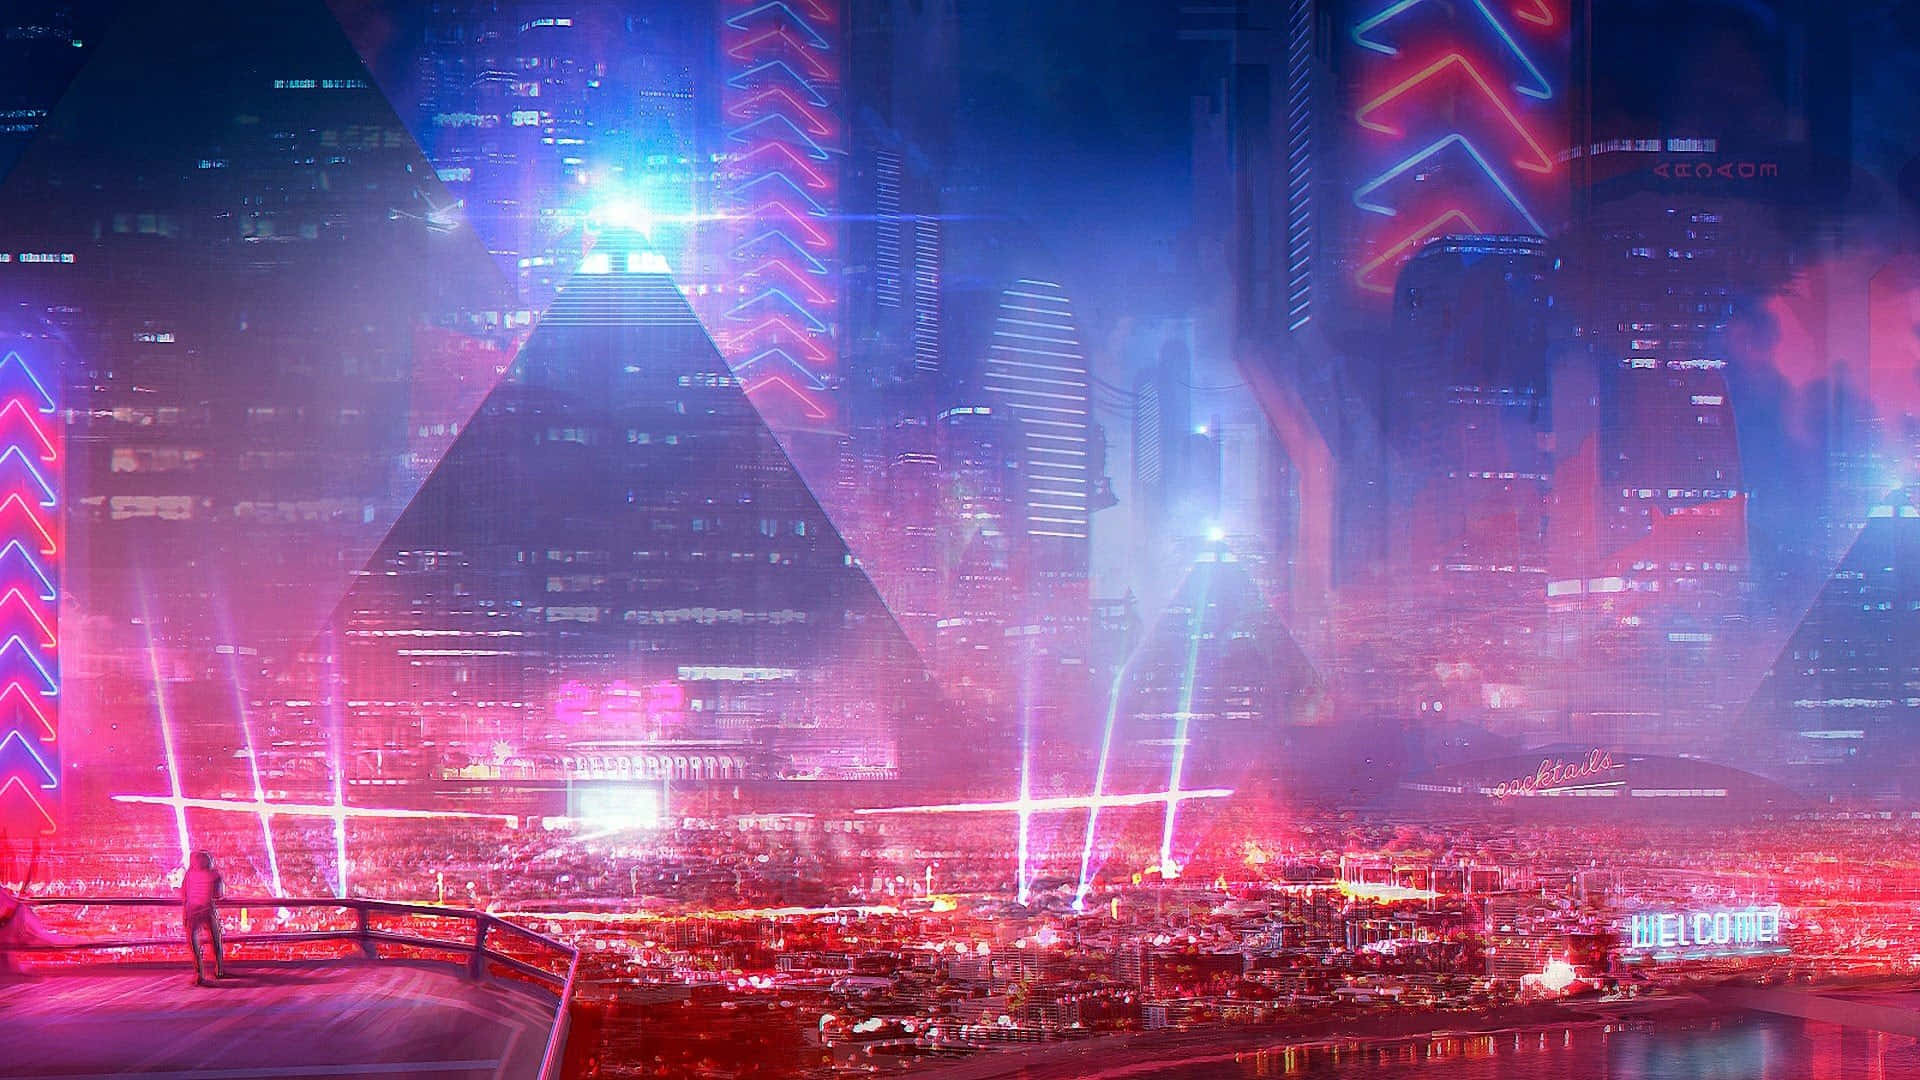 Udforskcyberpunk-byen Og Dens Neonoplyste, Futuristiske Skyline.